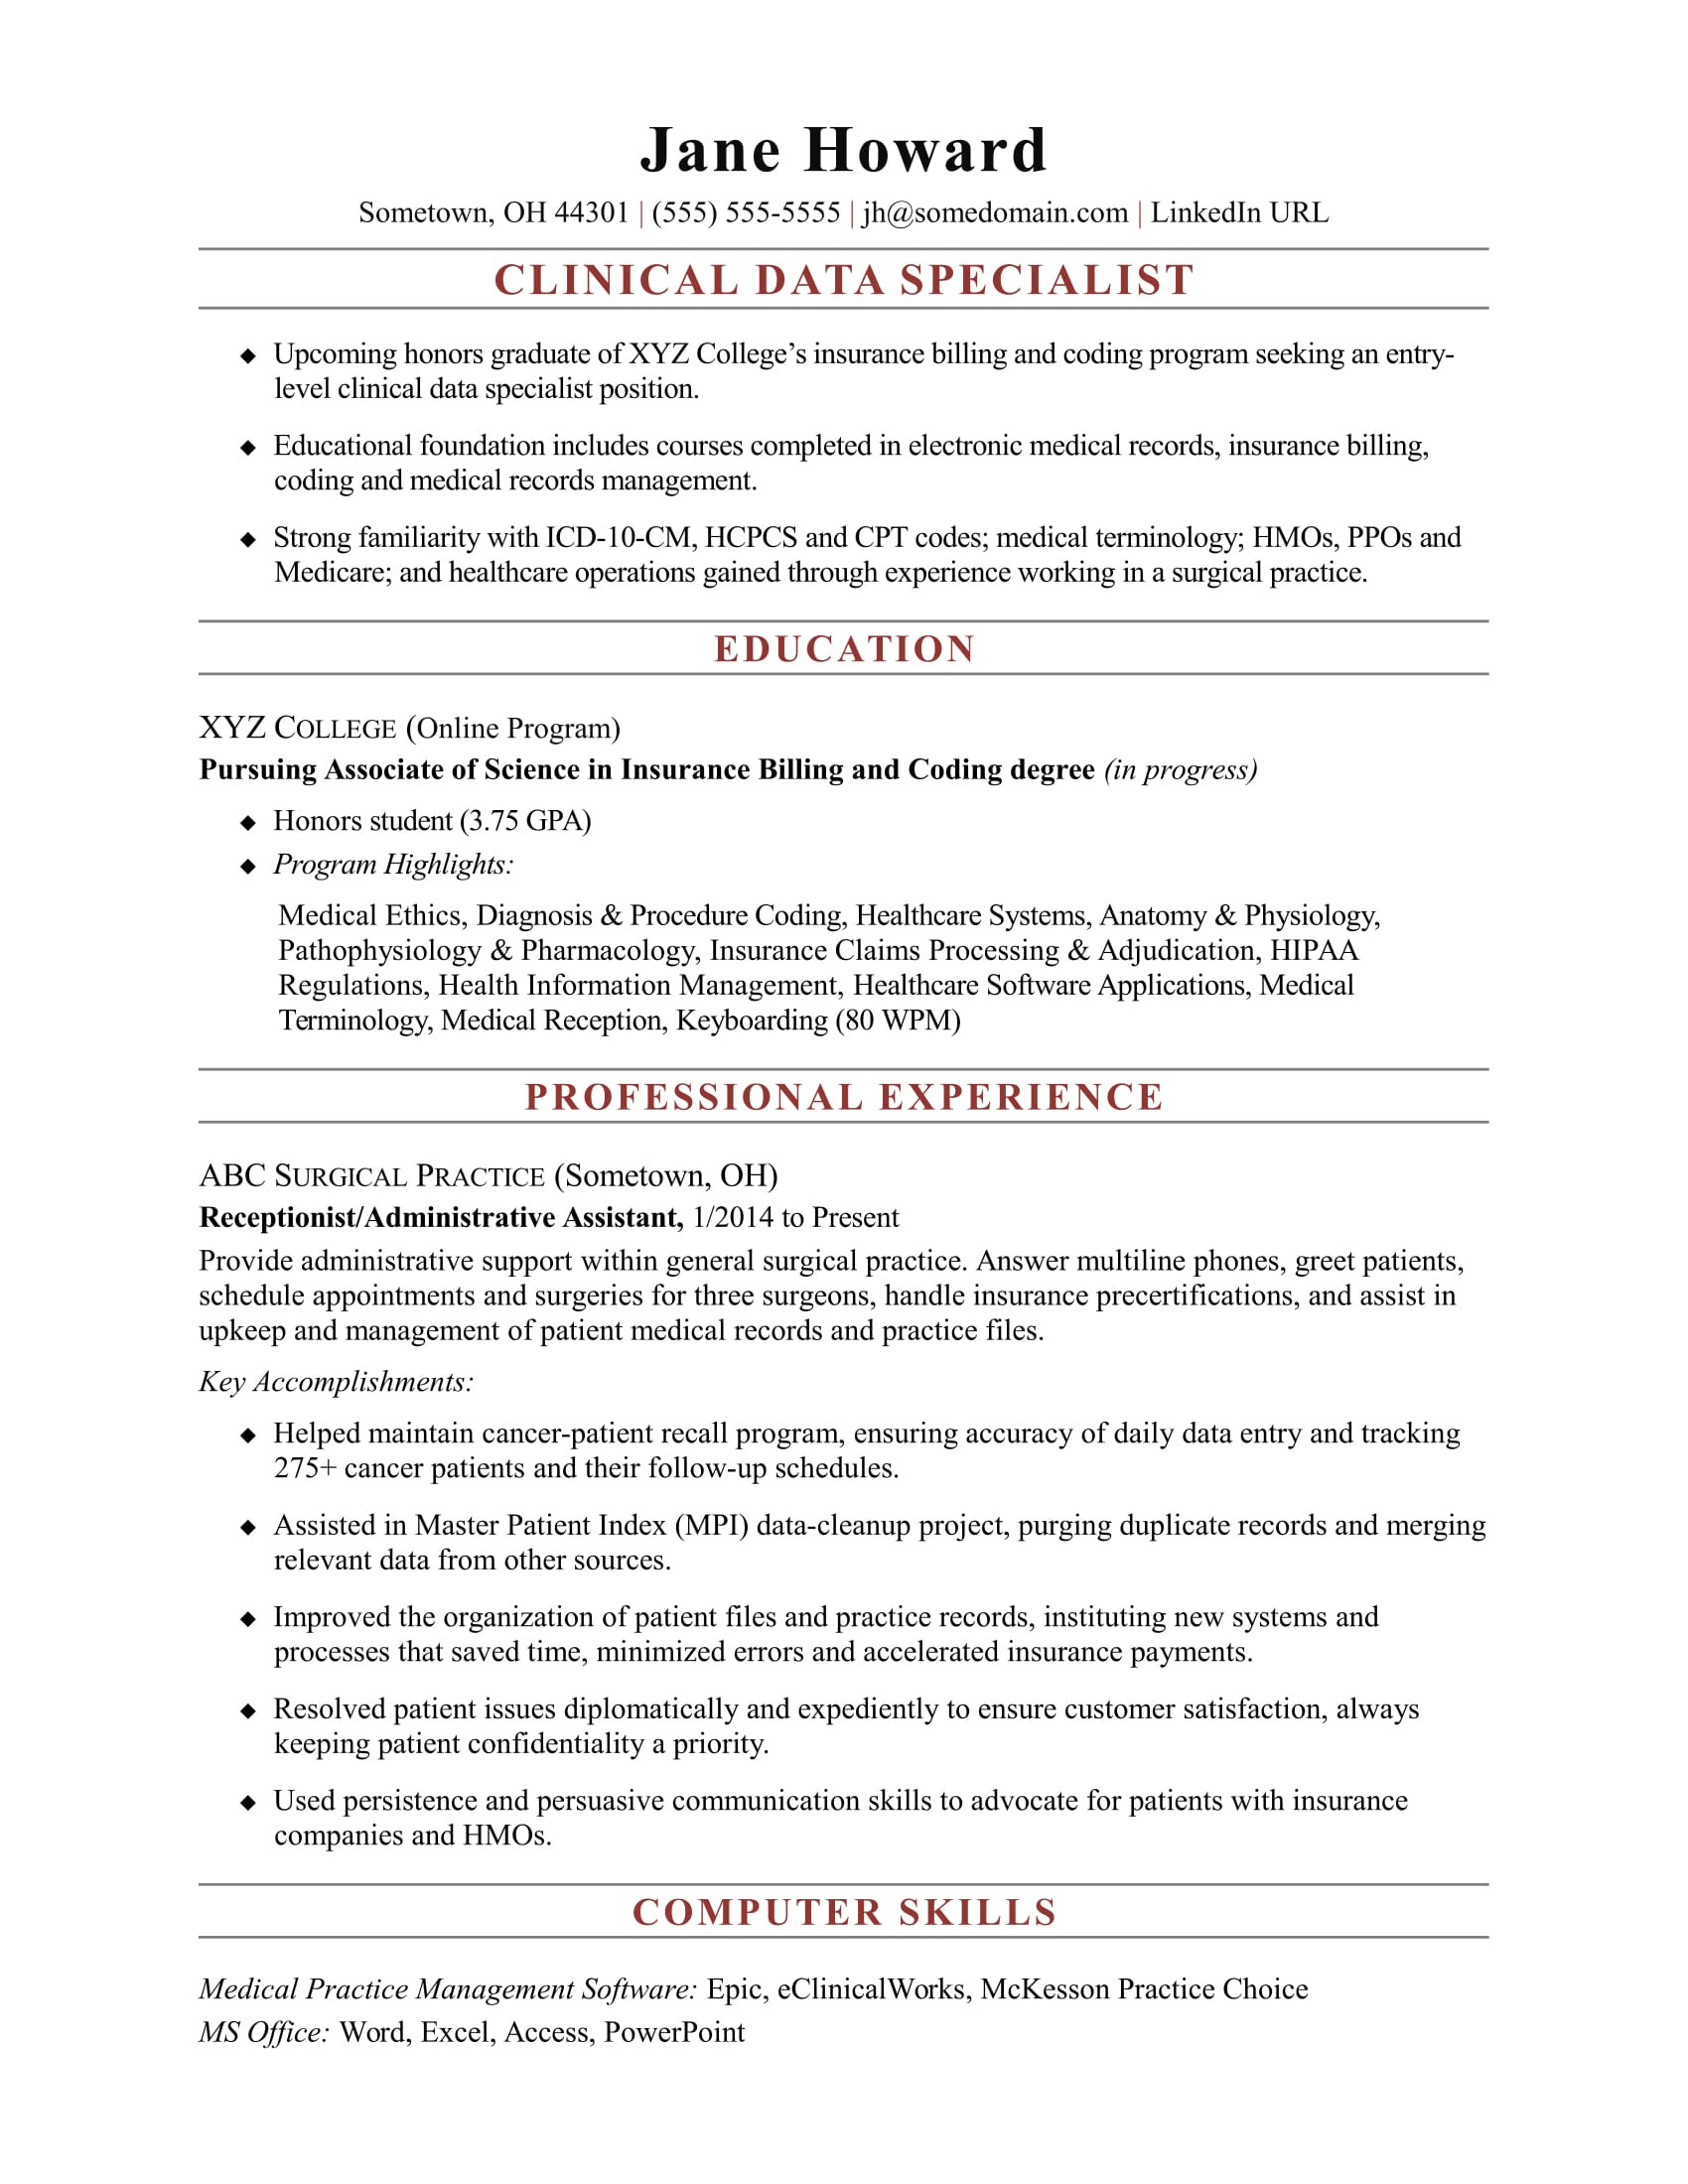 Degree In Progress On Resume Sample Entry-level Clinical Data Specialist Resume Sample Monster.com